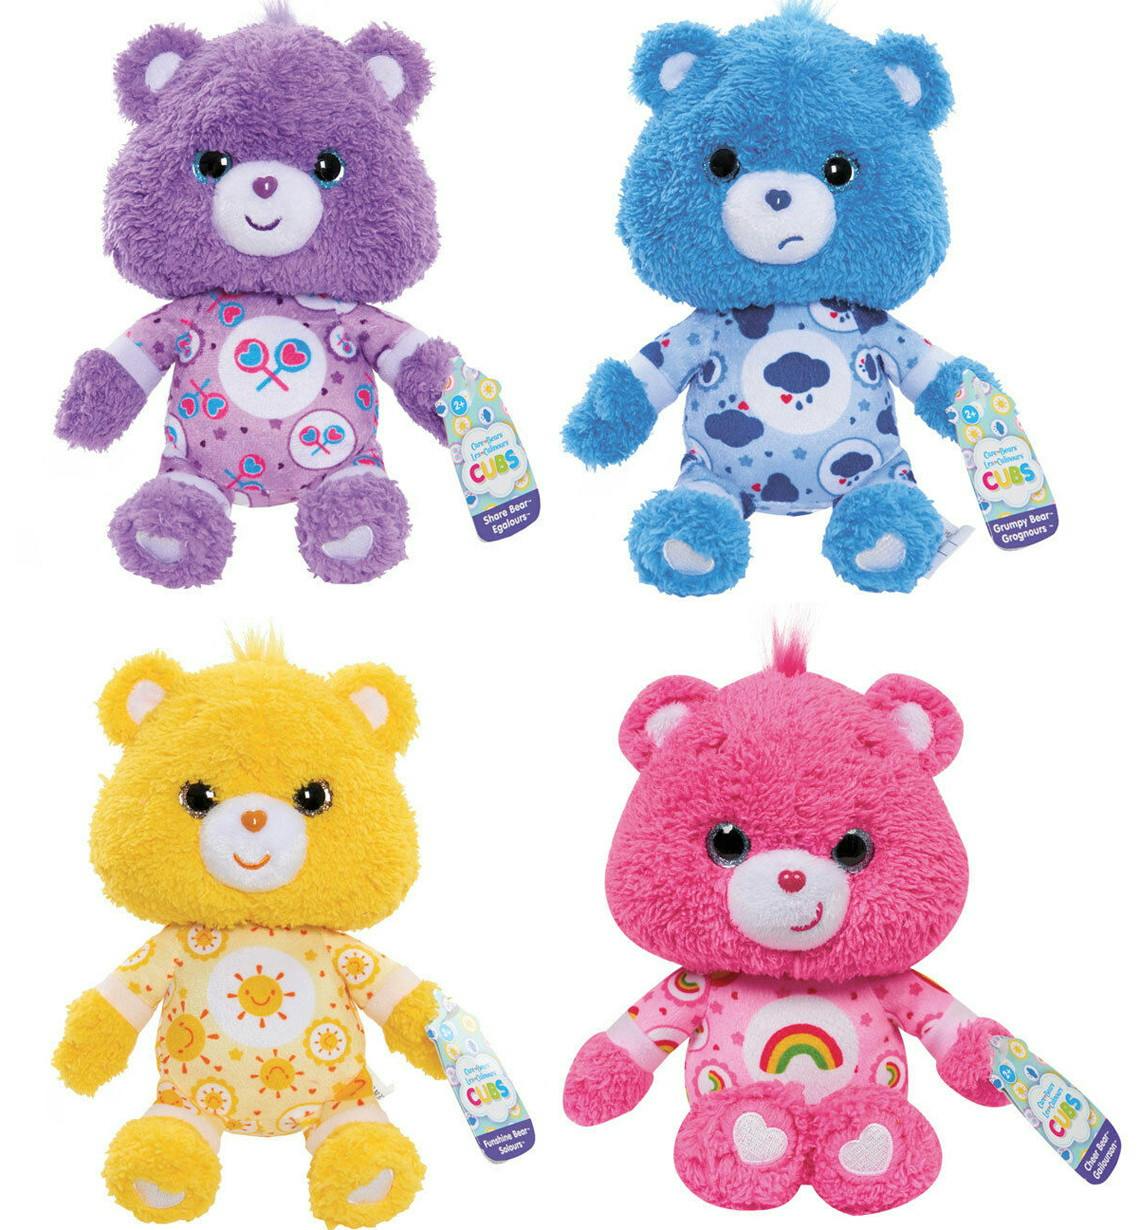 Care Bears Cubs Bundle Plush Dolls Good Luck Bedtime Love-a-Lot Harmony Set of 4